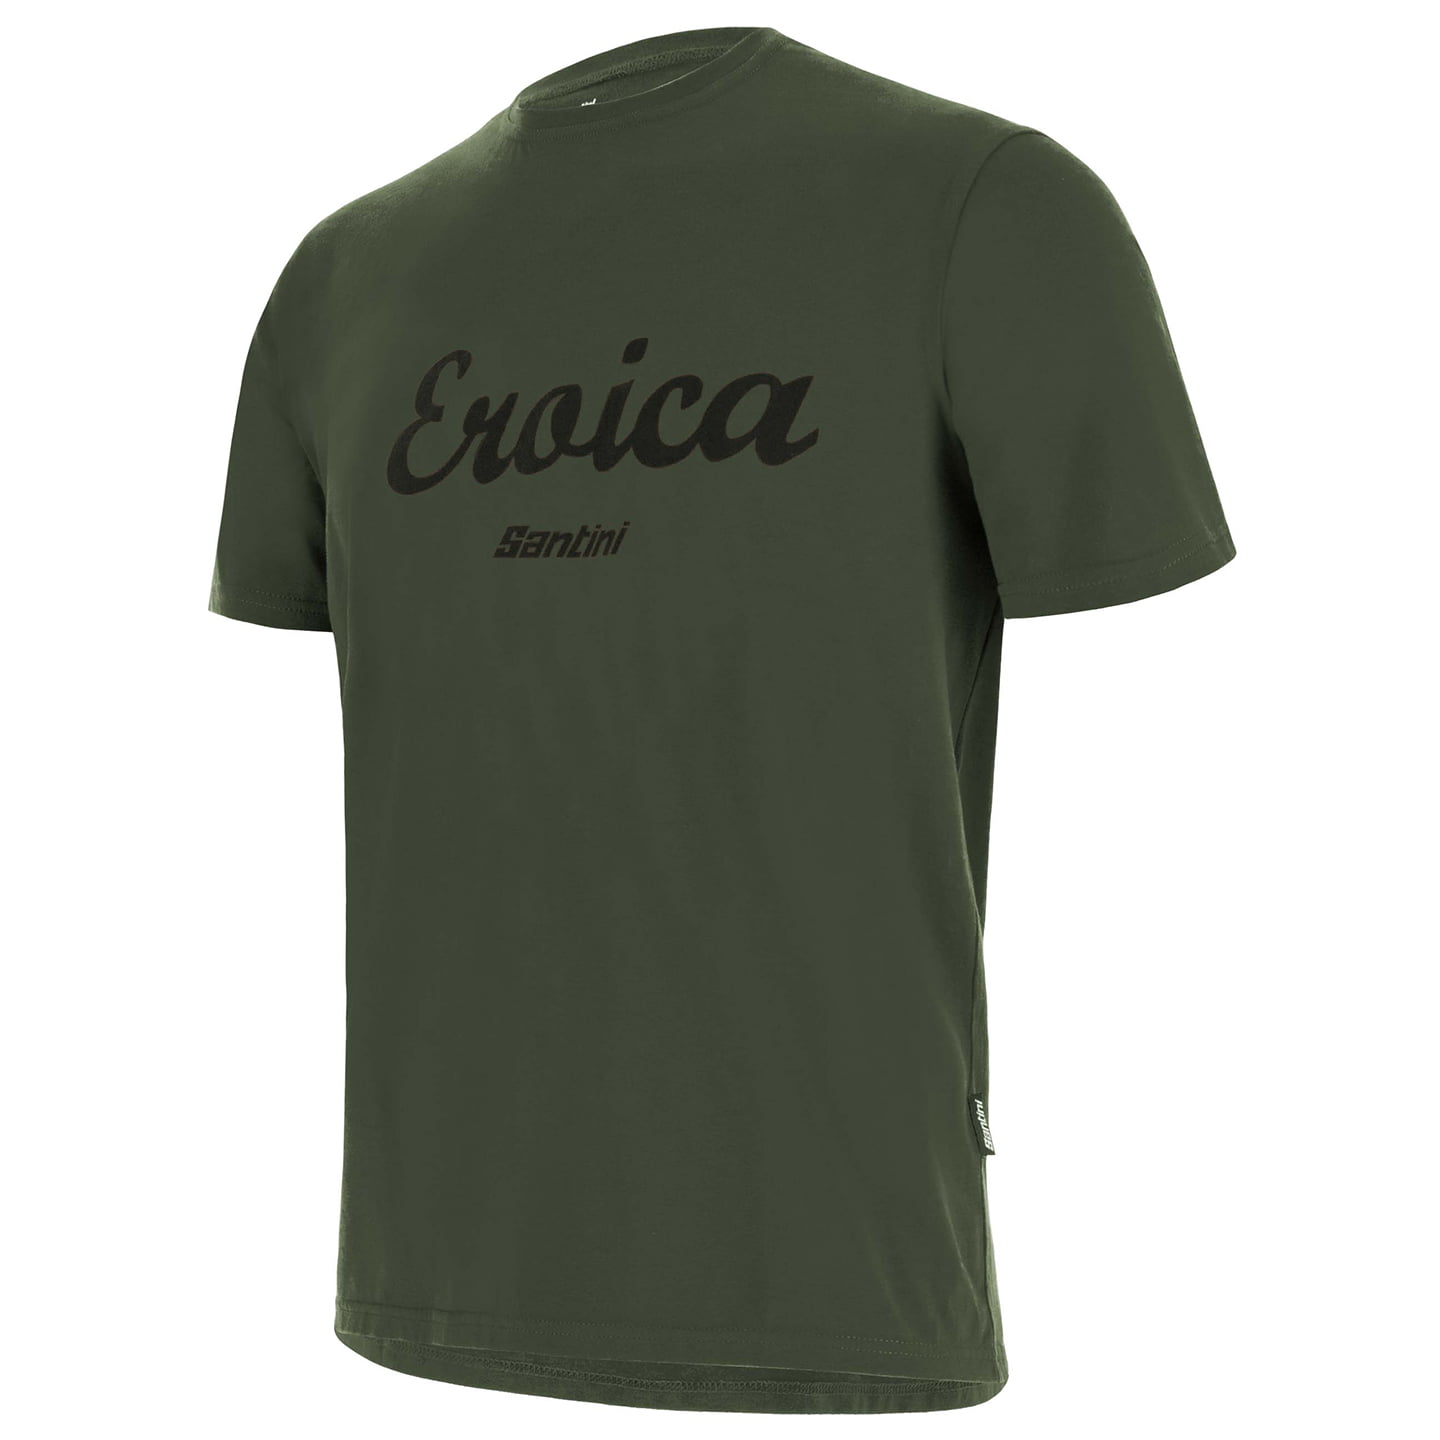 SANTINI T-Shirt Eroica, for men, size S, MTB Jersey, MTB clothing